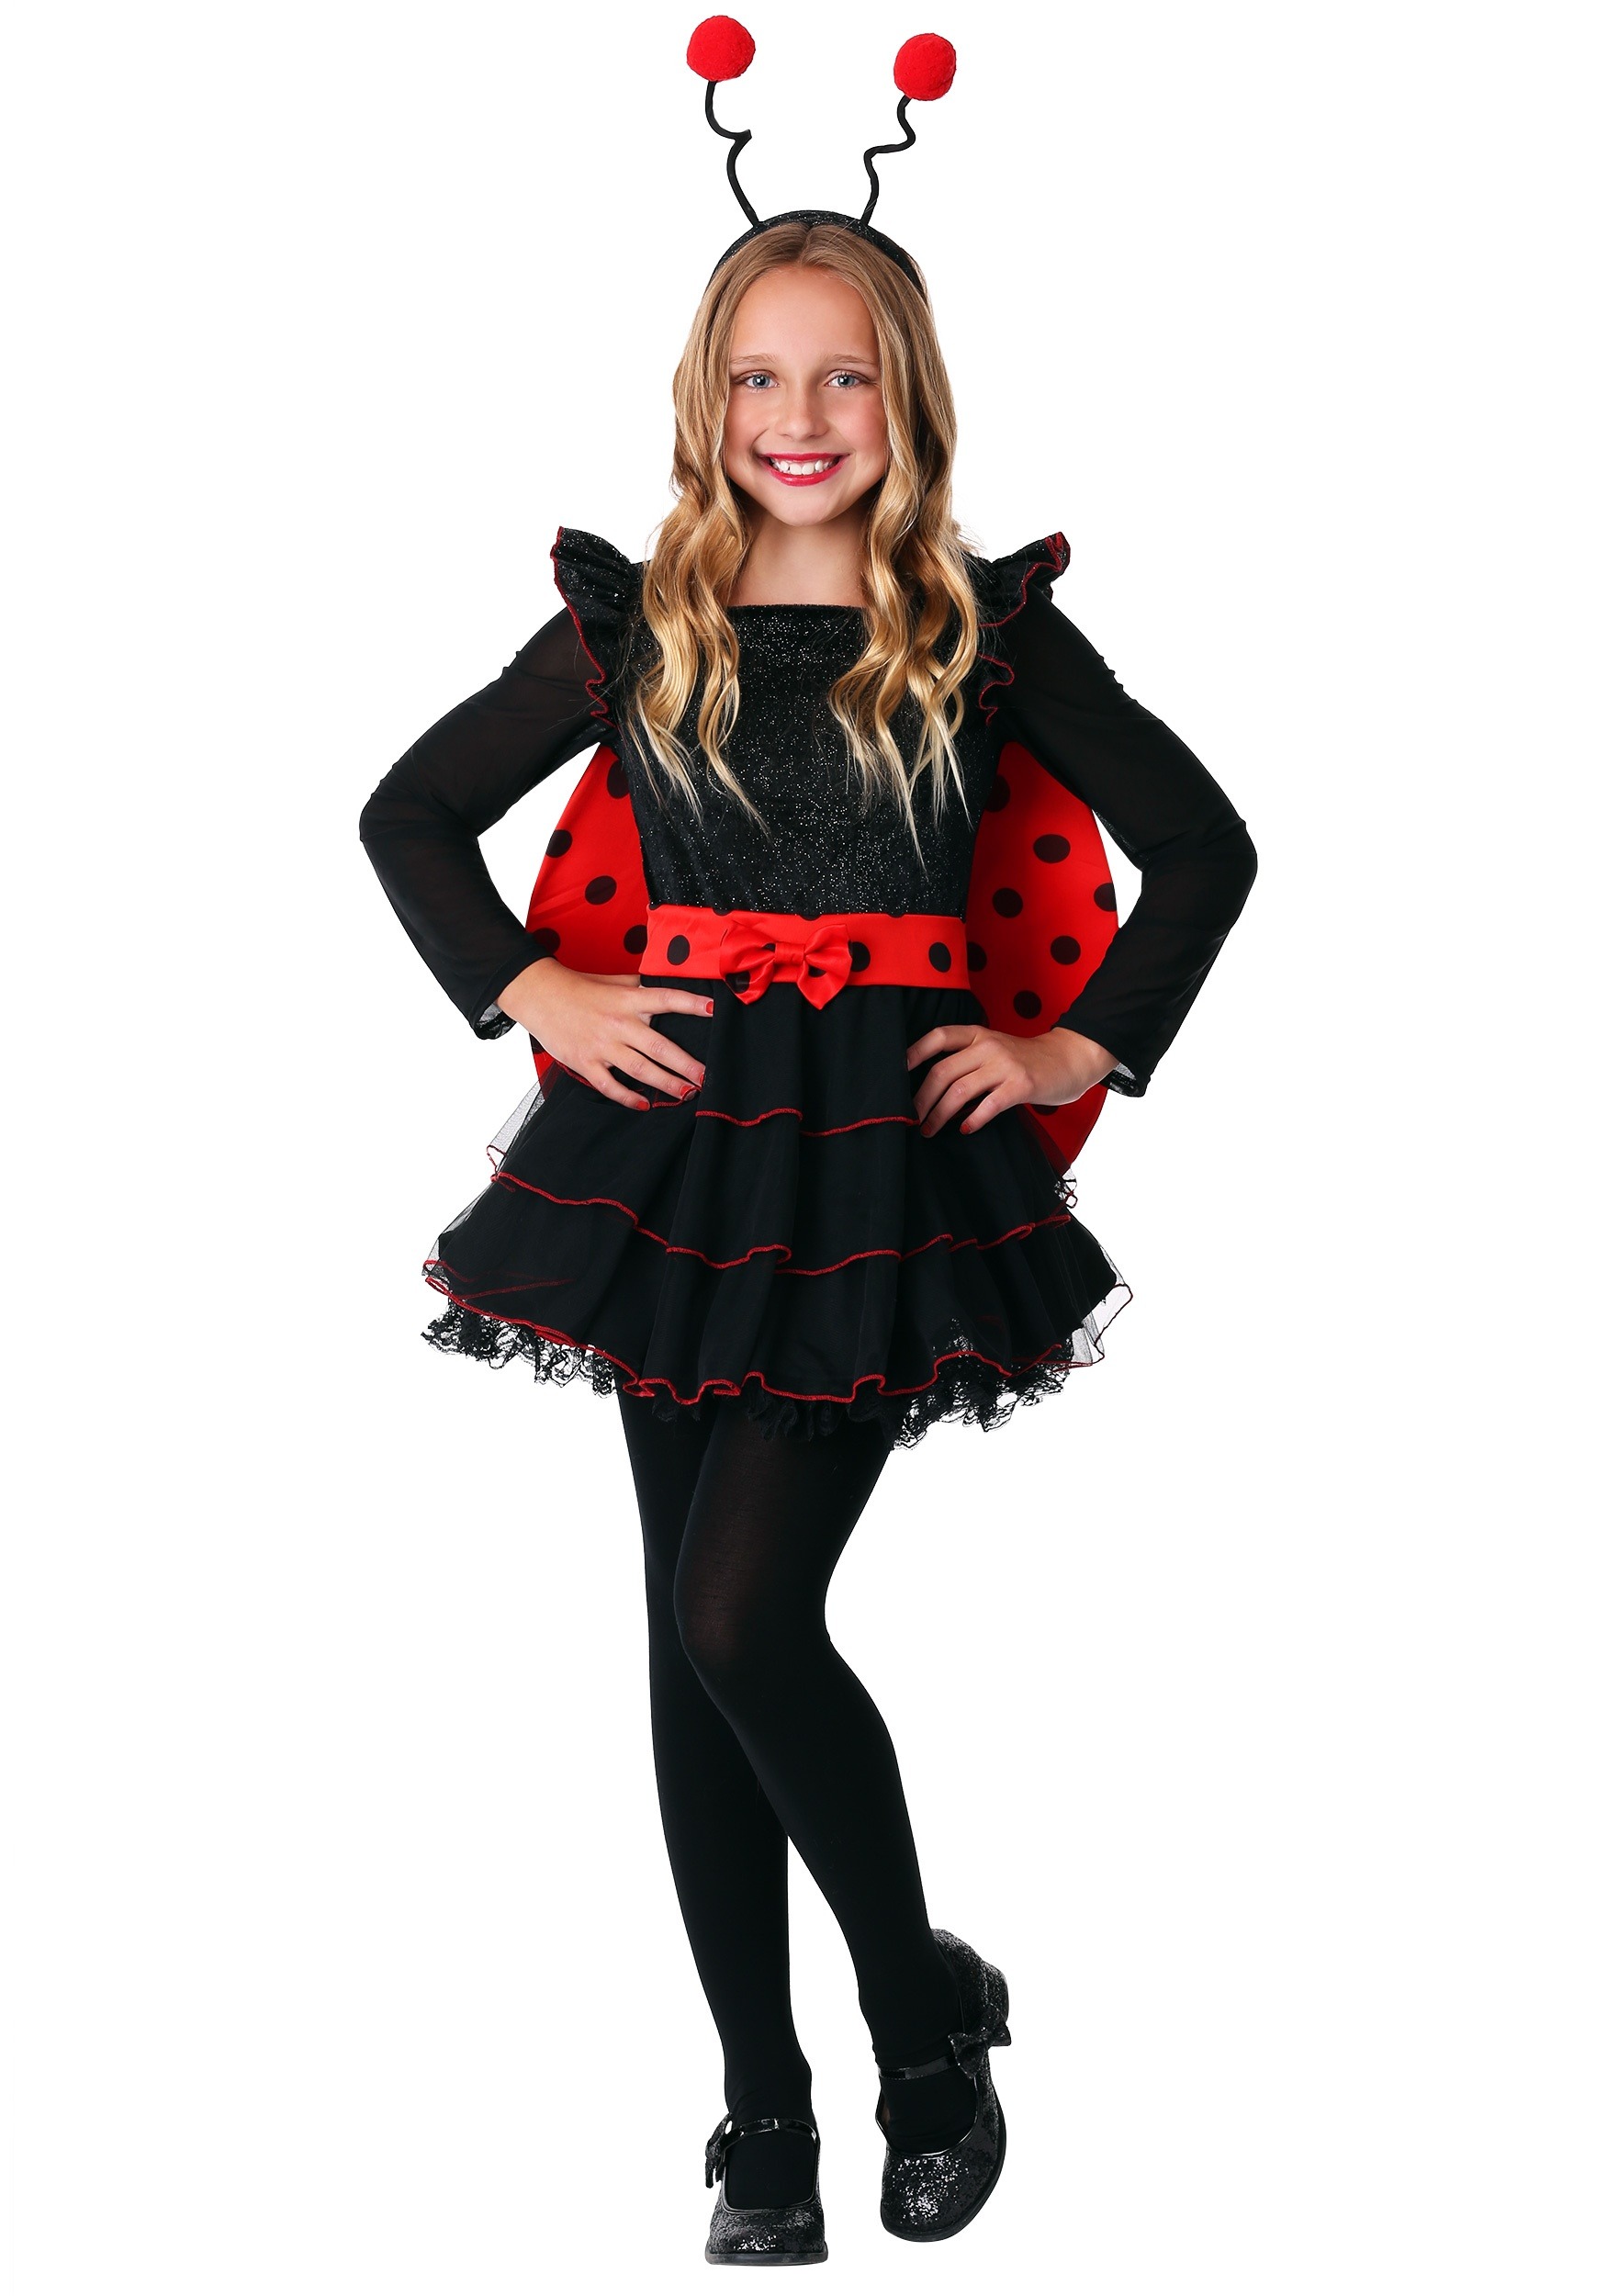 Photos - Fancy Dress FUN Costumes Sweet Ladybug Girl's Costume Black/Red FUN6463CH